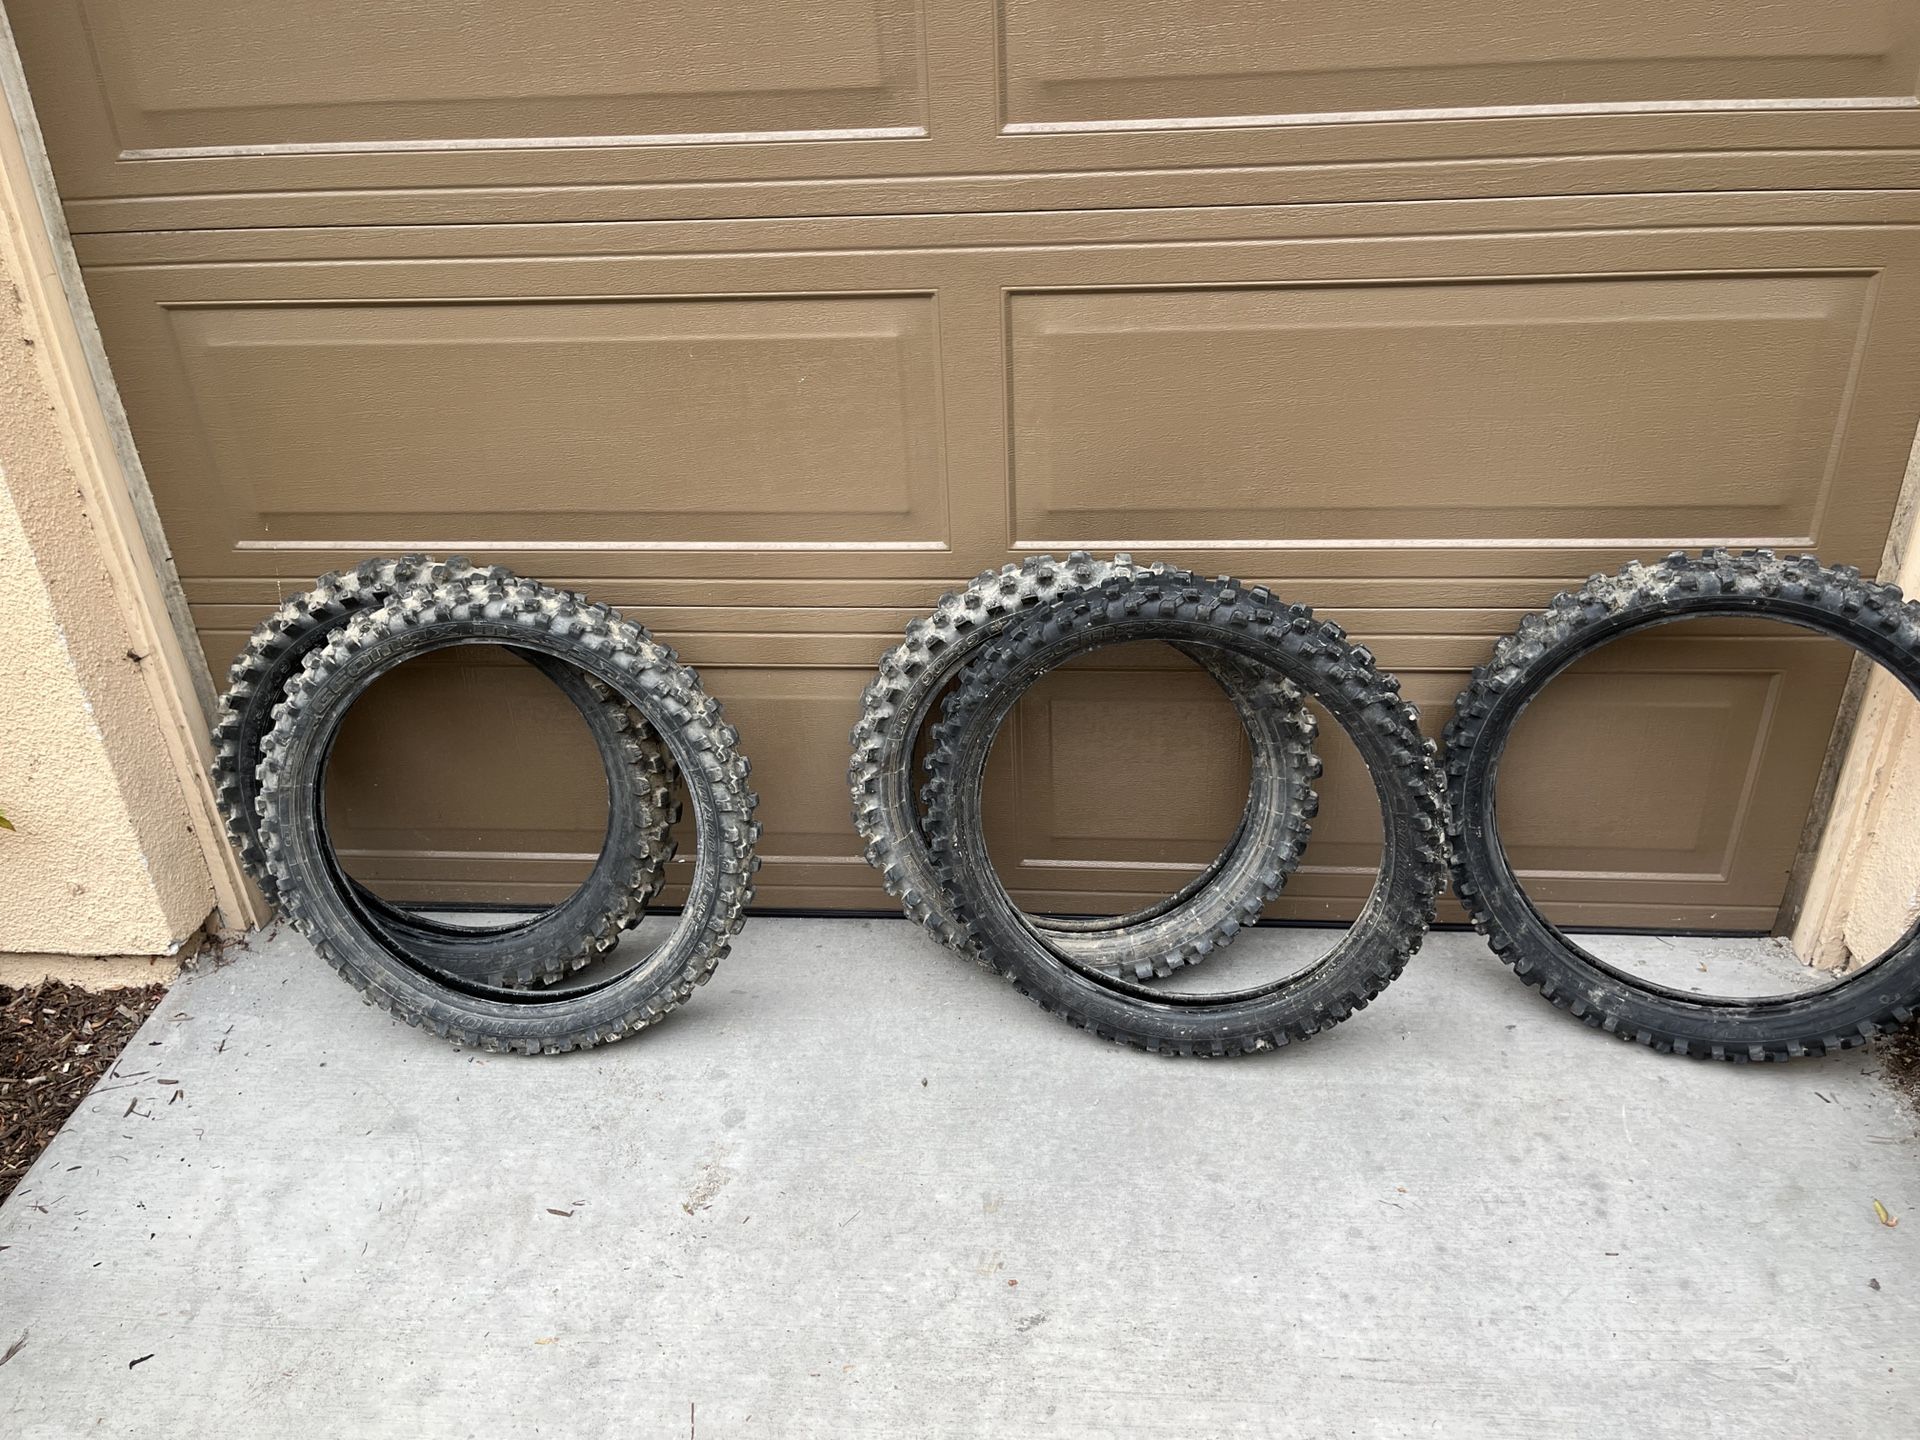 Dunlop Geomax MX33 21” and 19” dirt bike tires